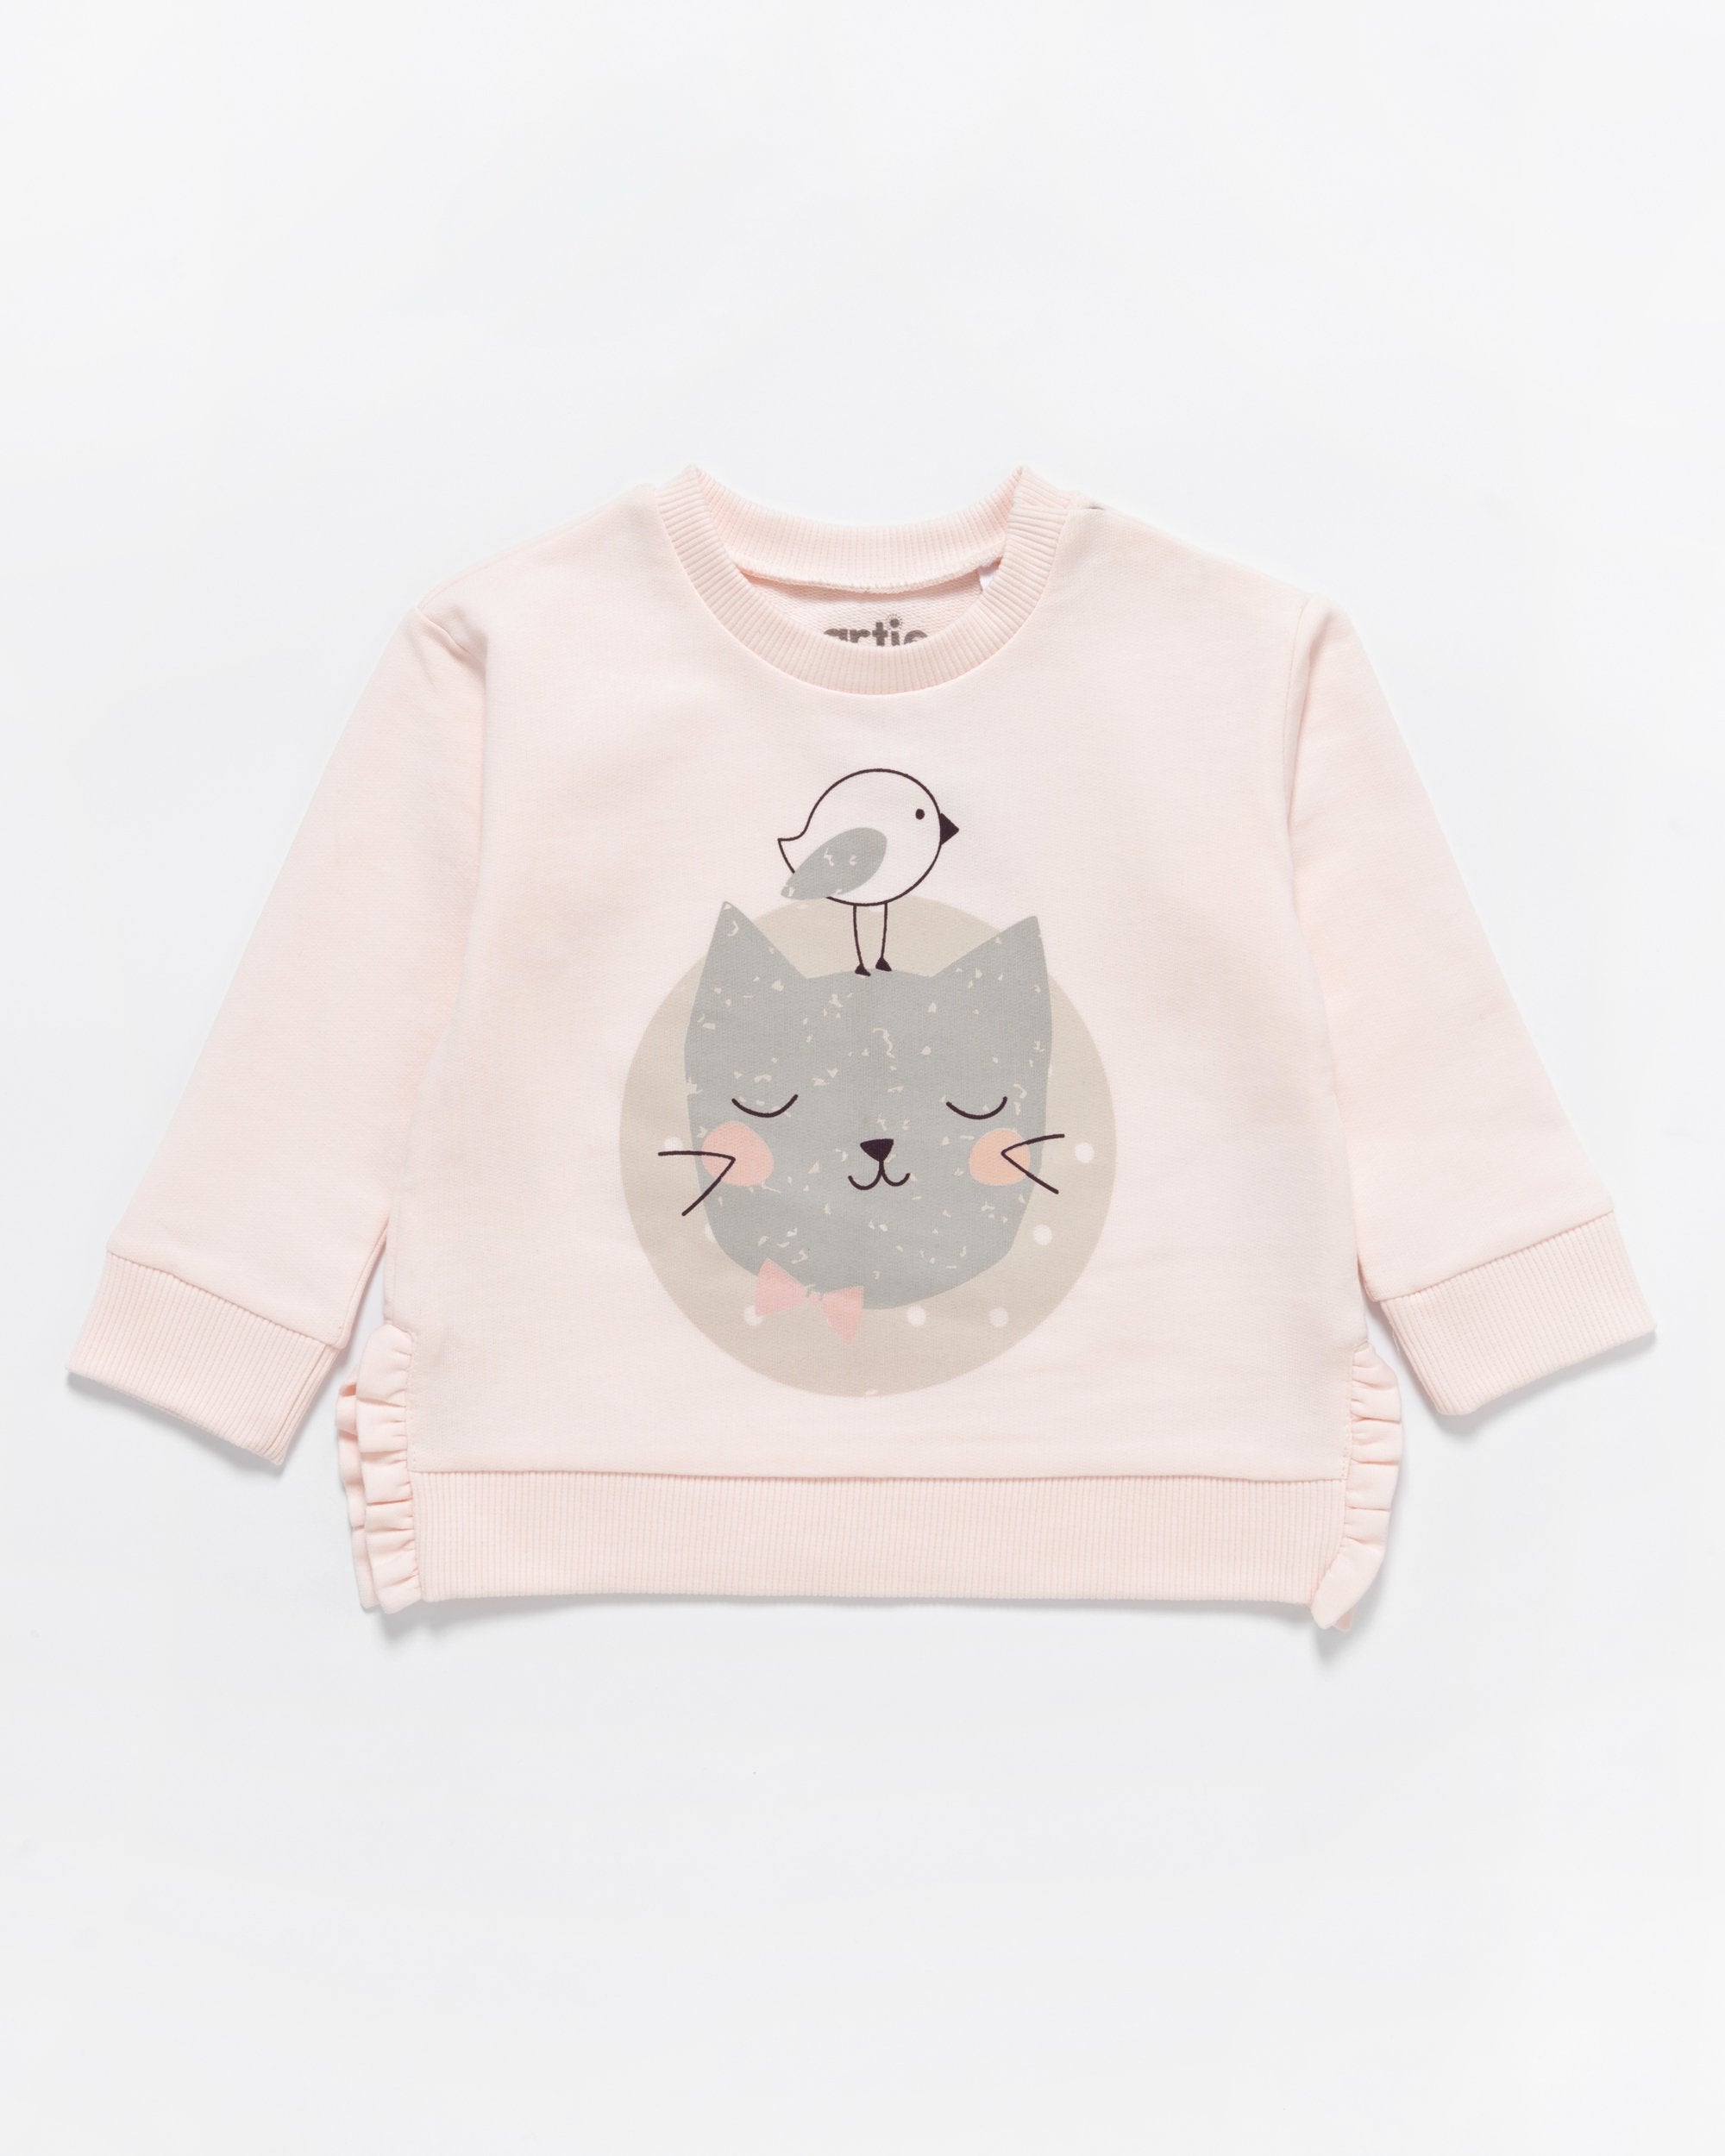 Girls Pink Frill Sweatshirt with Kitty Cat design